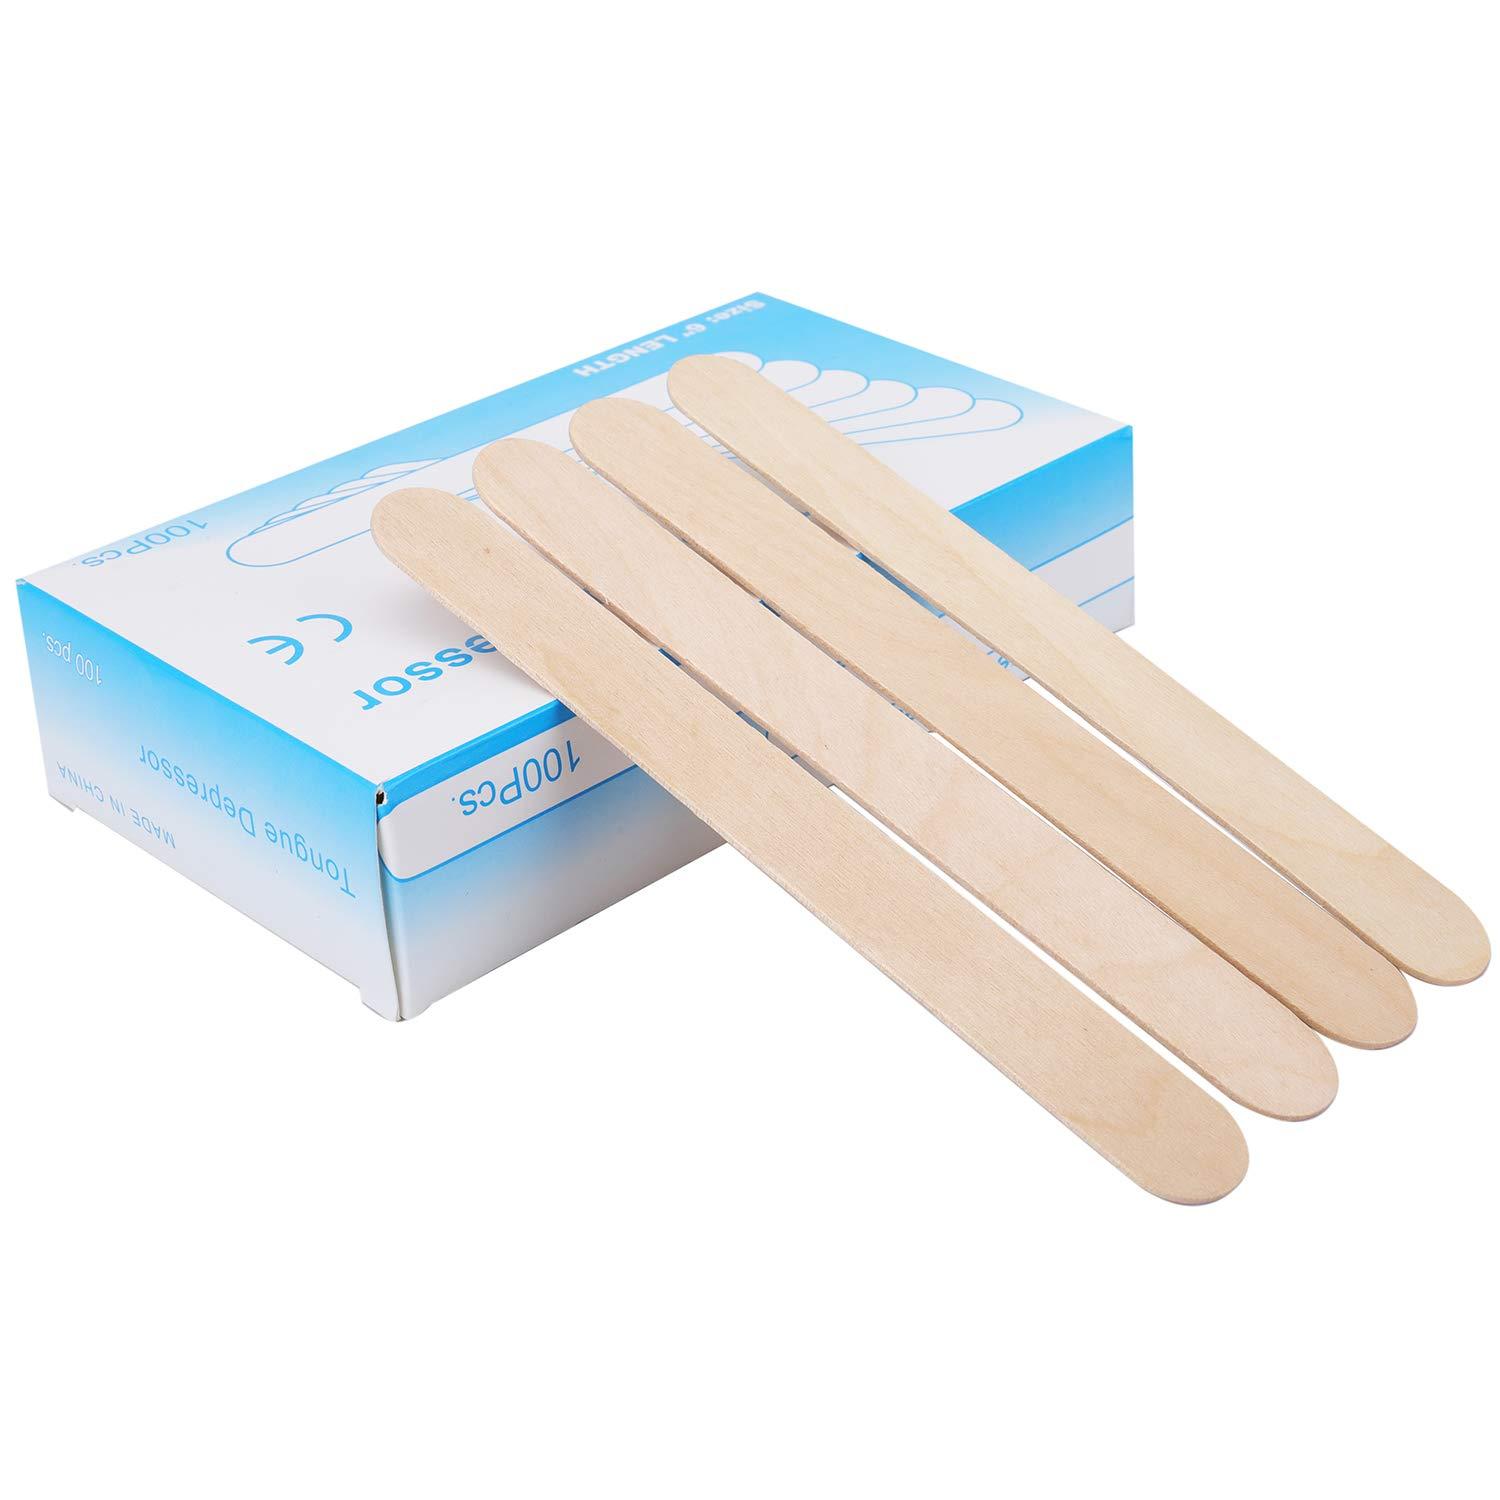 Waxing Spatula Wholesale, Disposable Wooden Wax Sticks Bulk